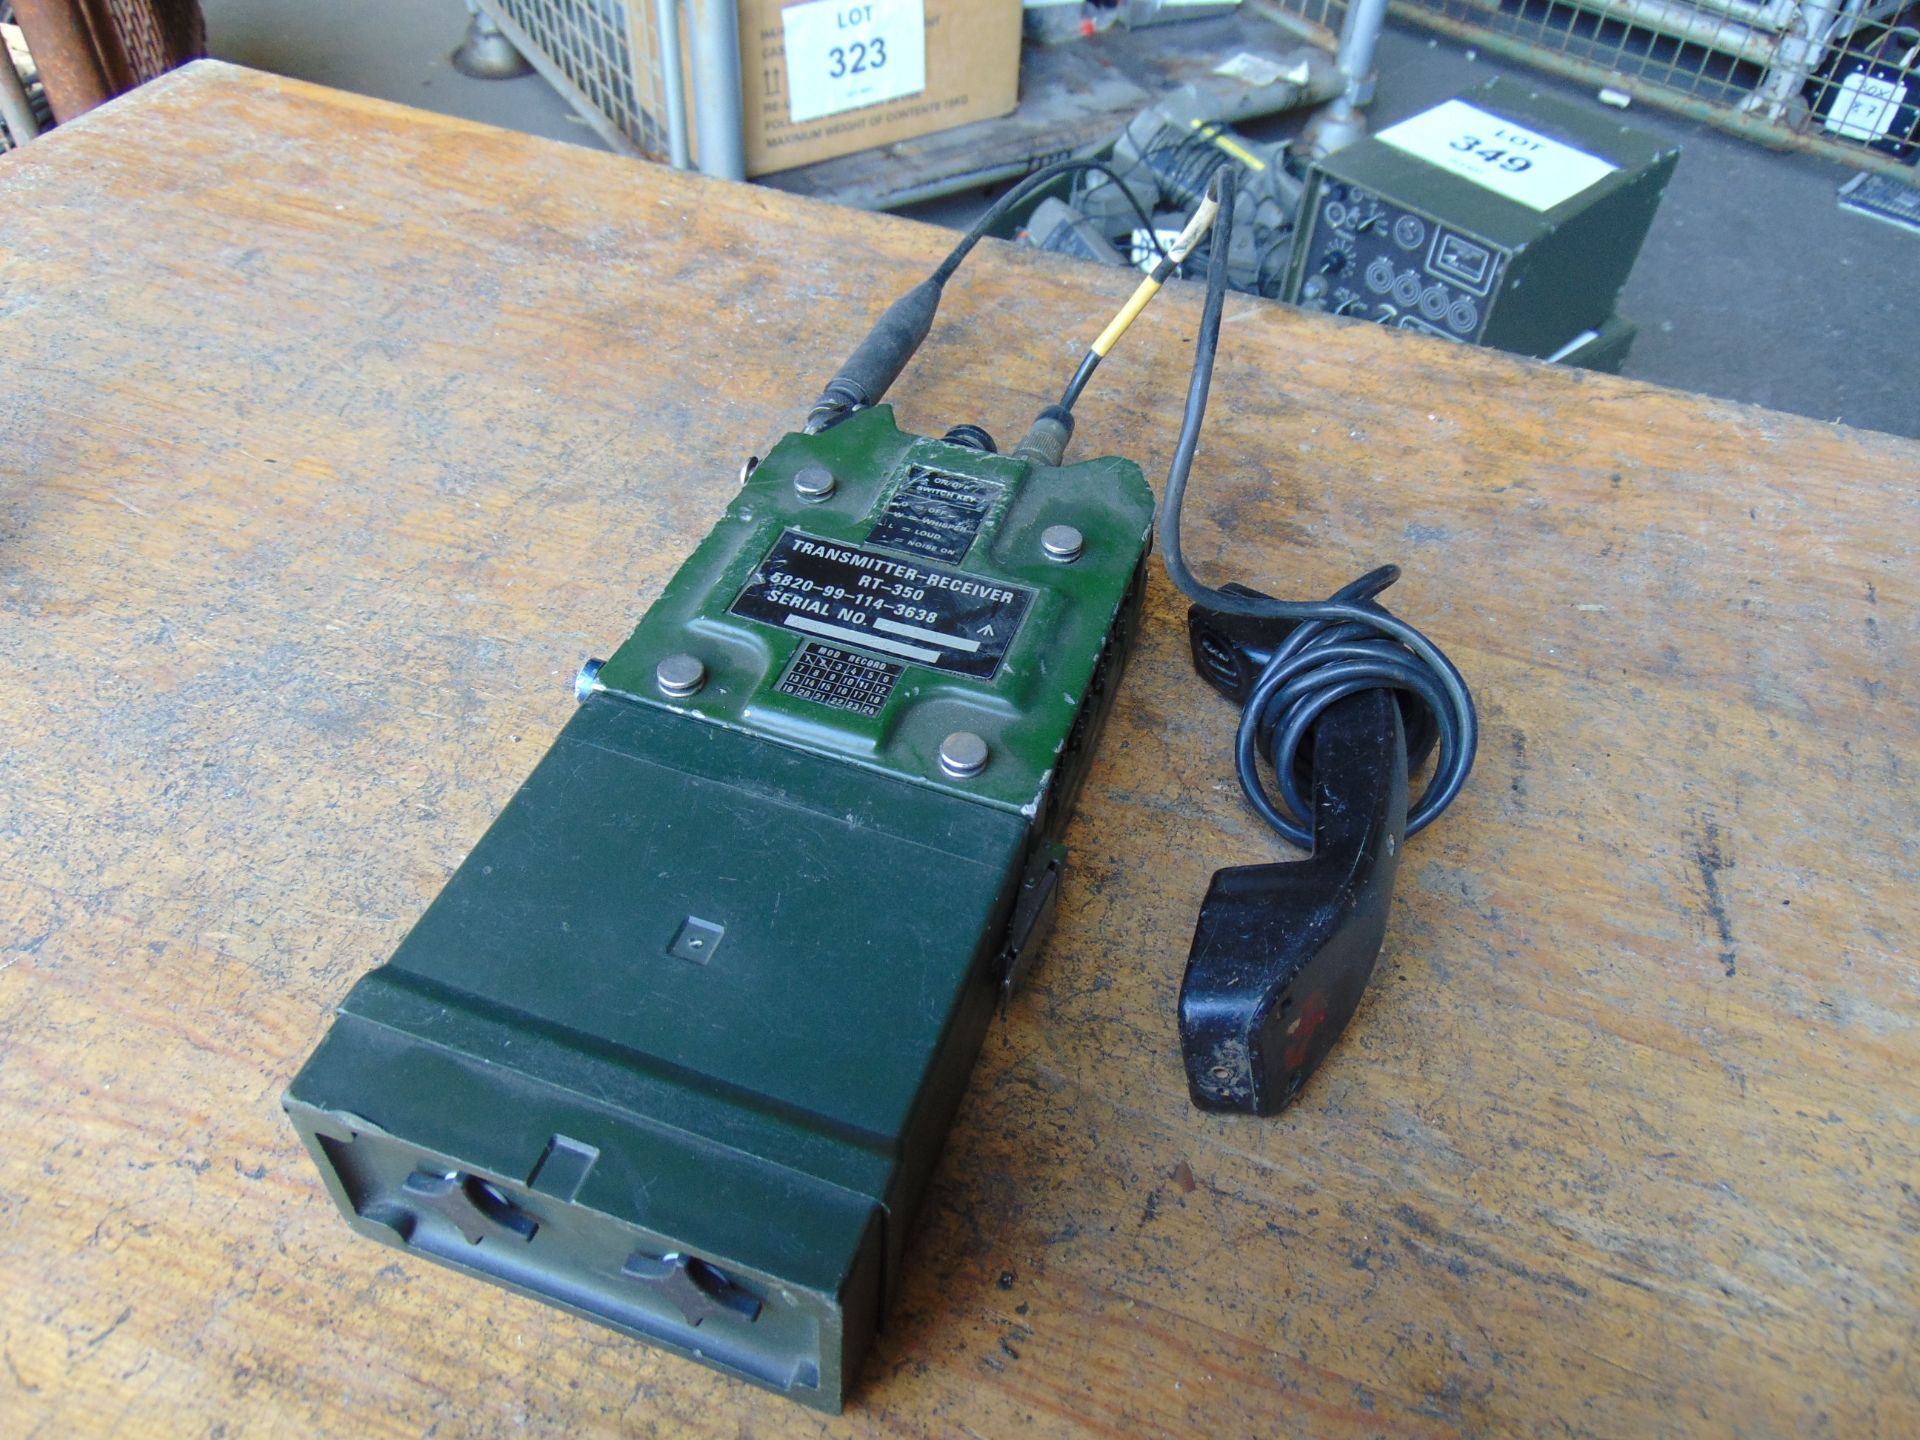 Clansman UK/RT 350 Transmitter Receiver c/w Battery Pack, Antenna & Handset - Image 4 of 4